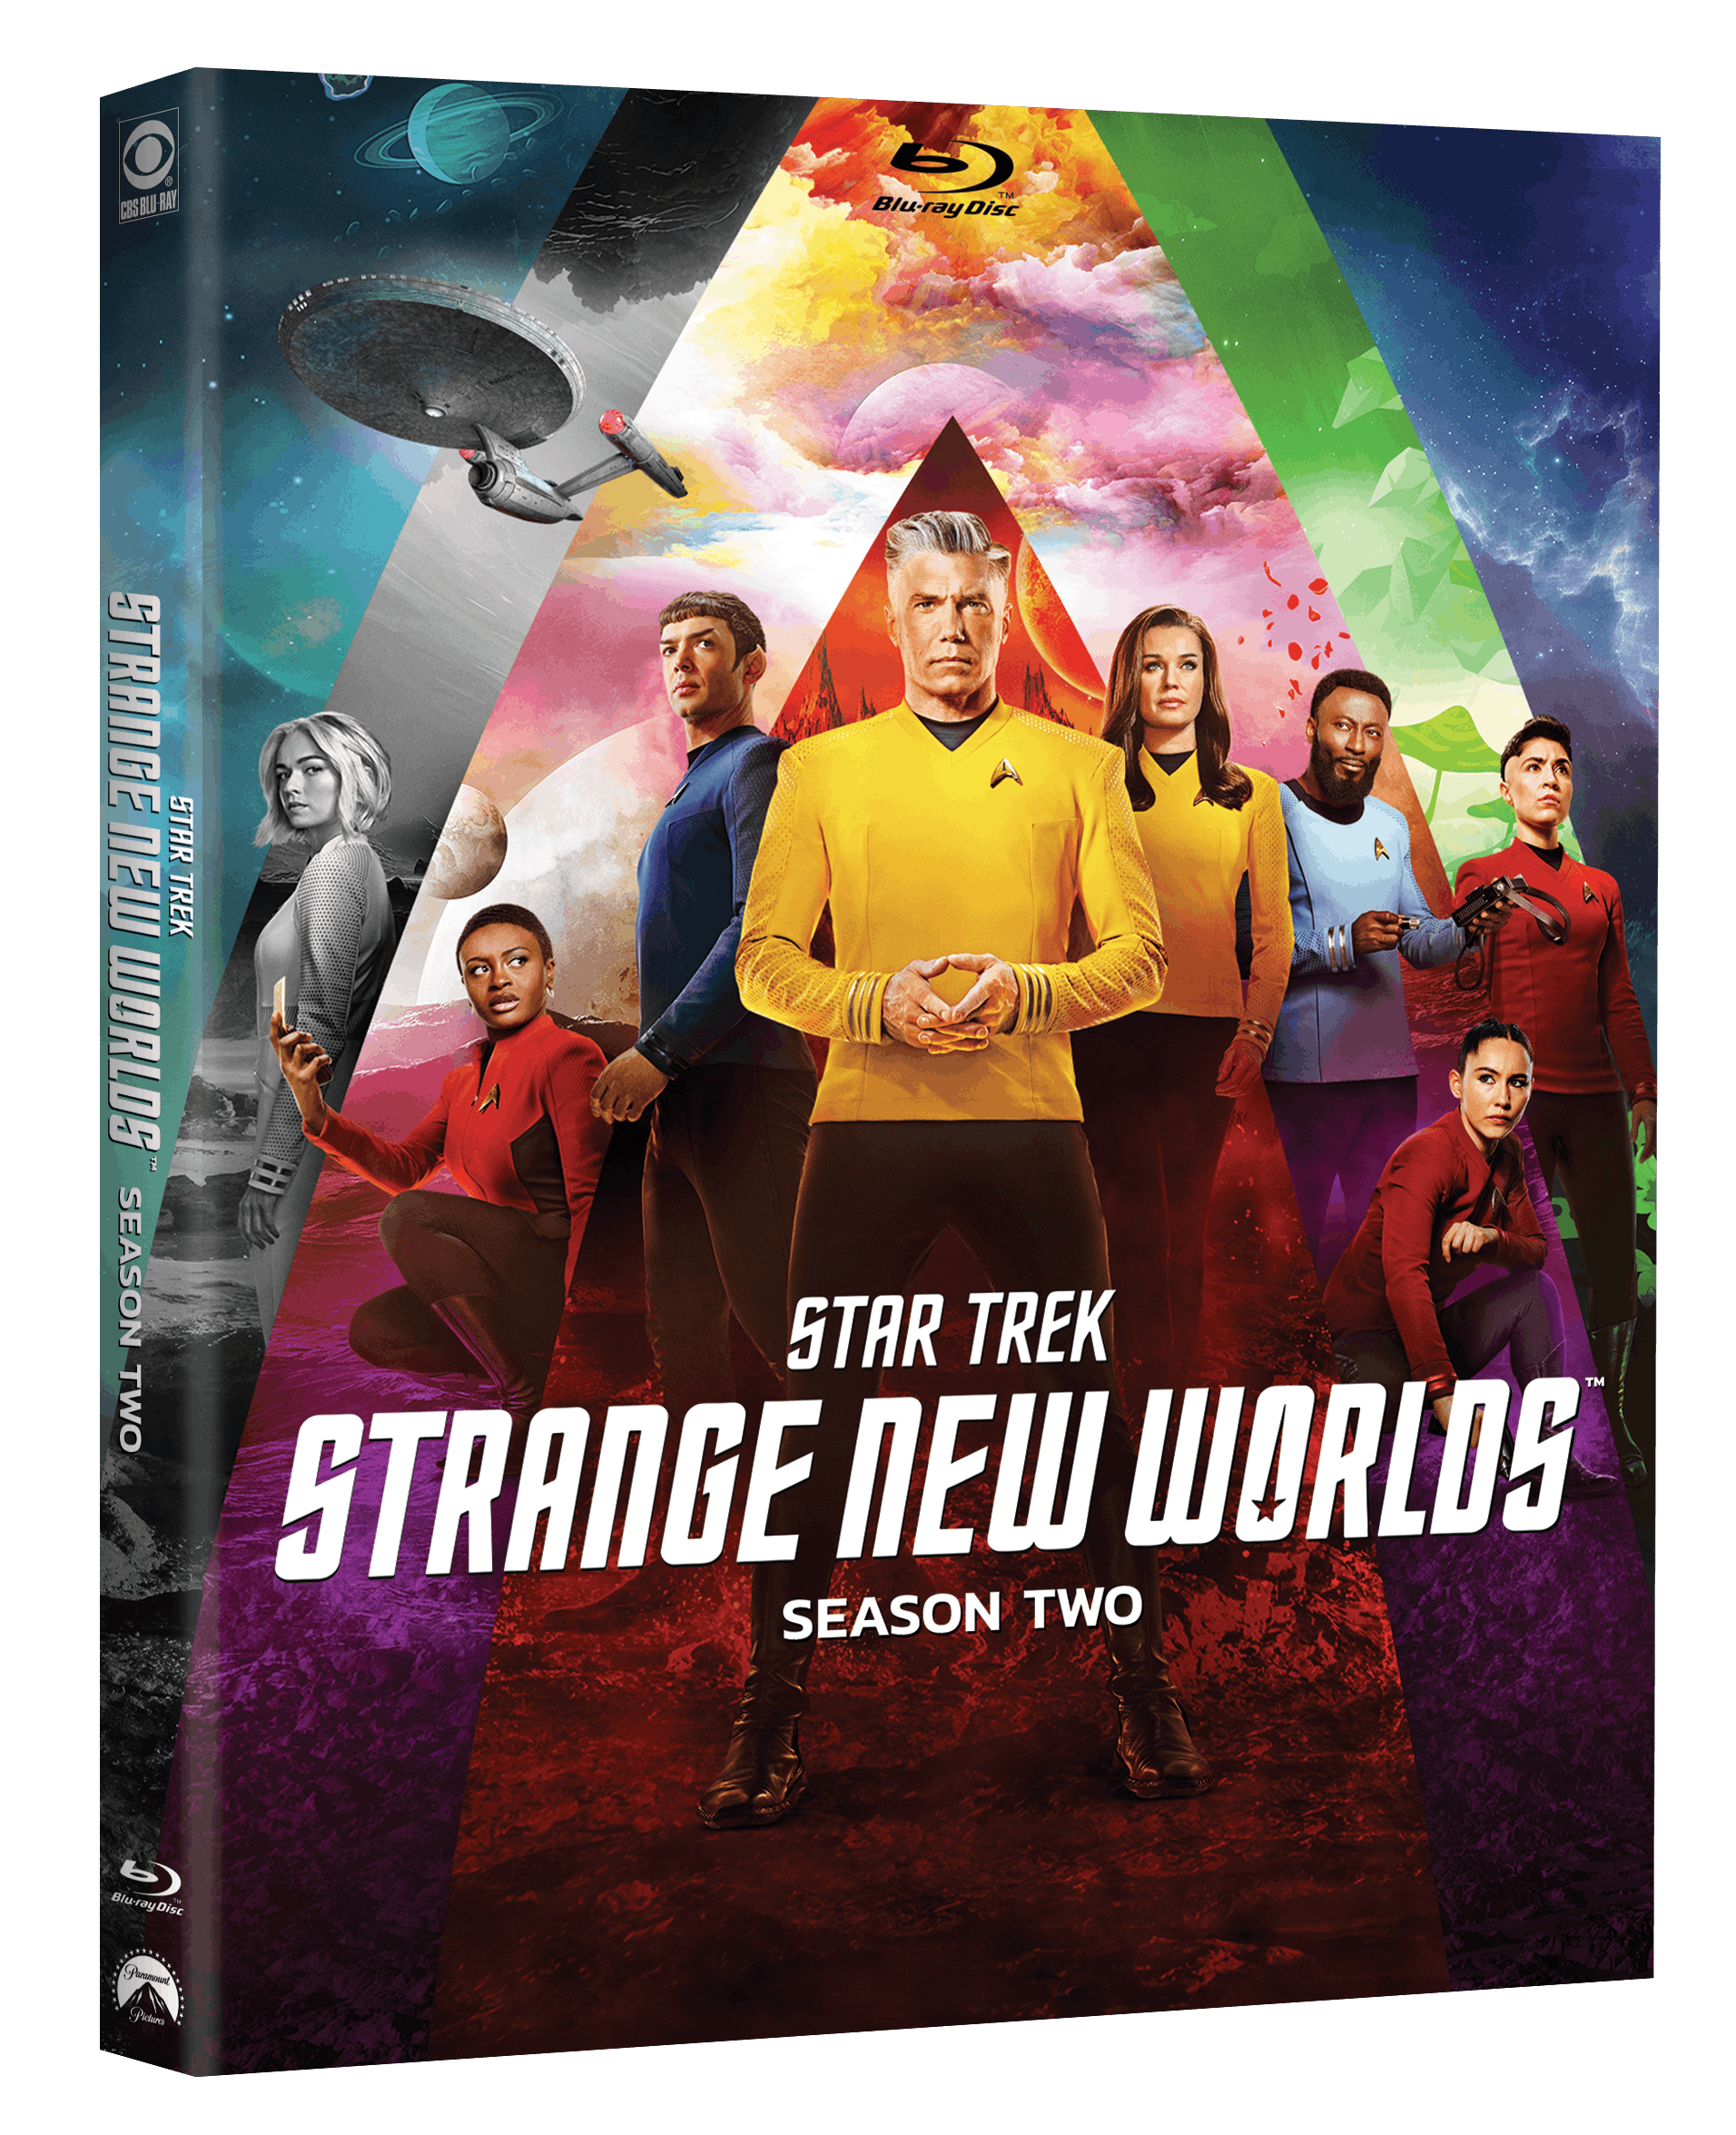 Star Trek: Strange New Worlds Season 2 - Blu-ray packshot